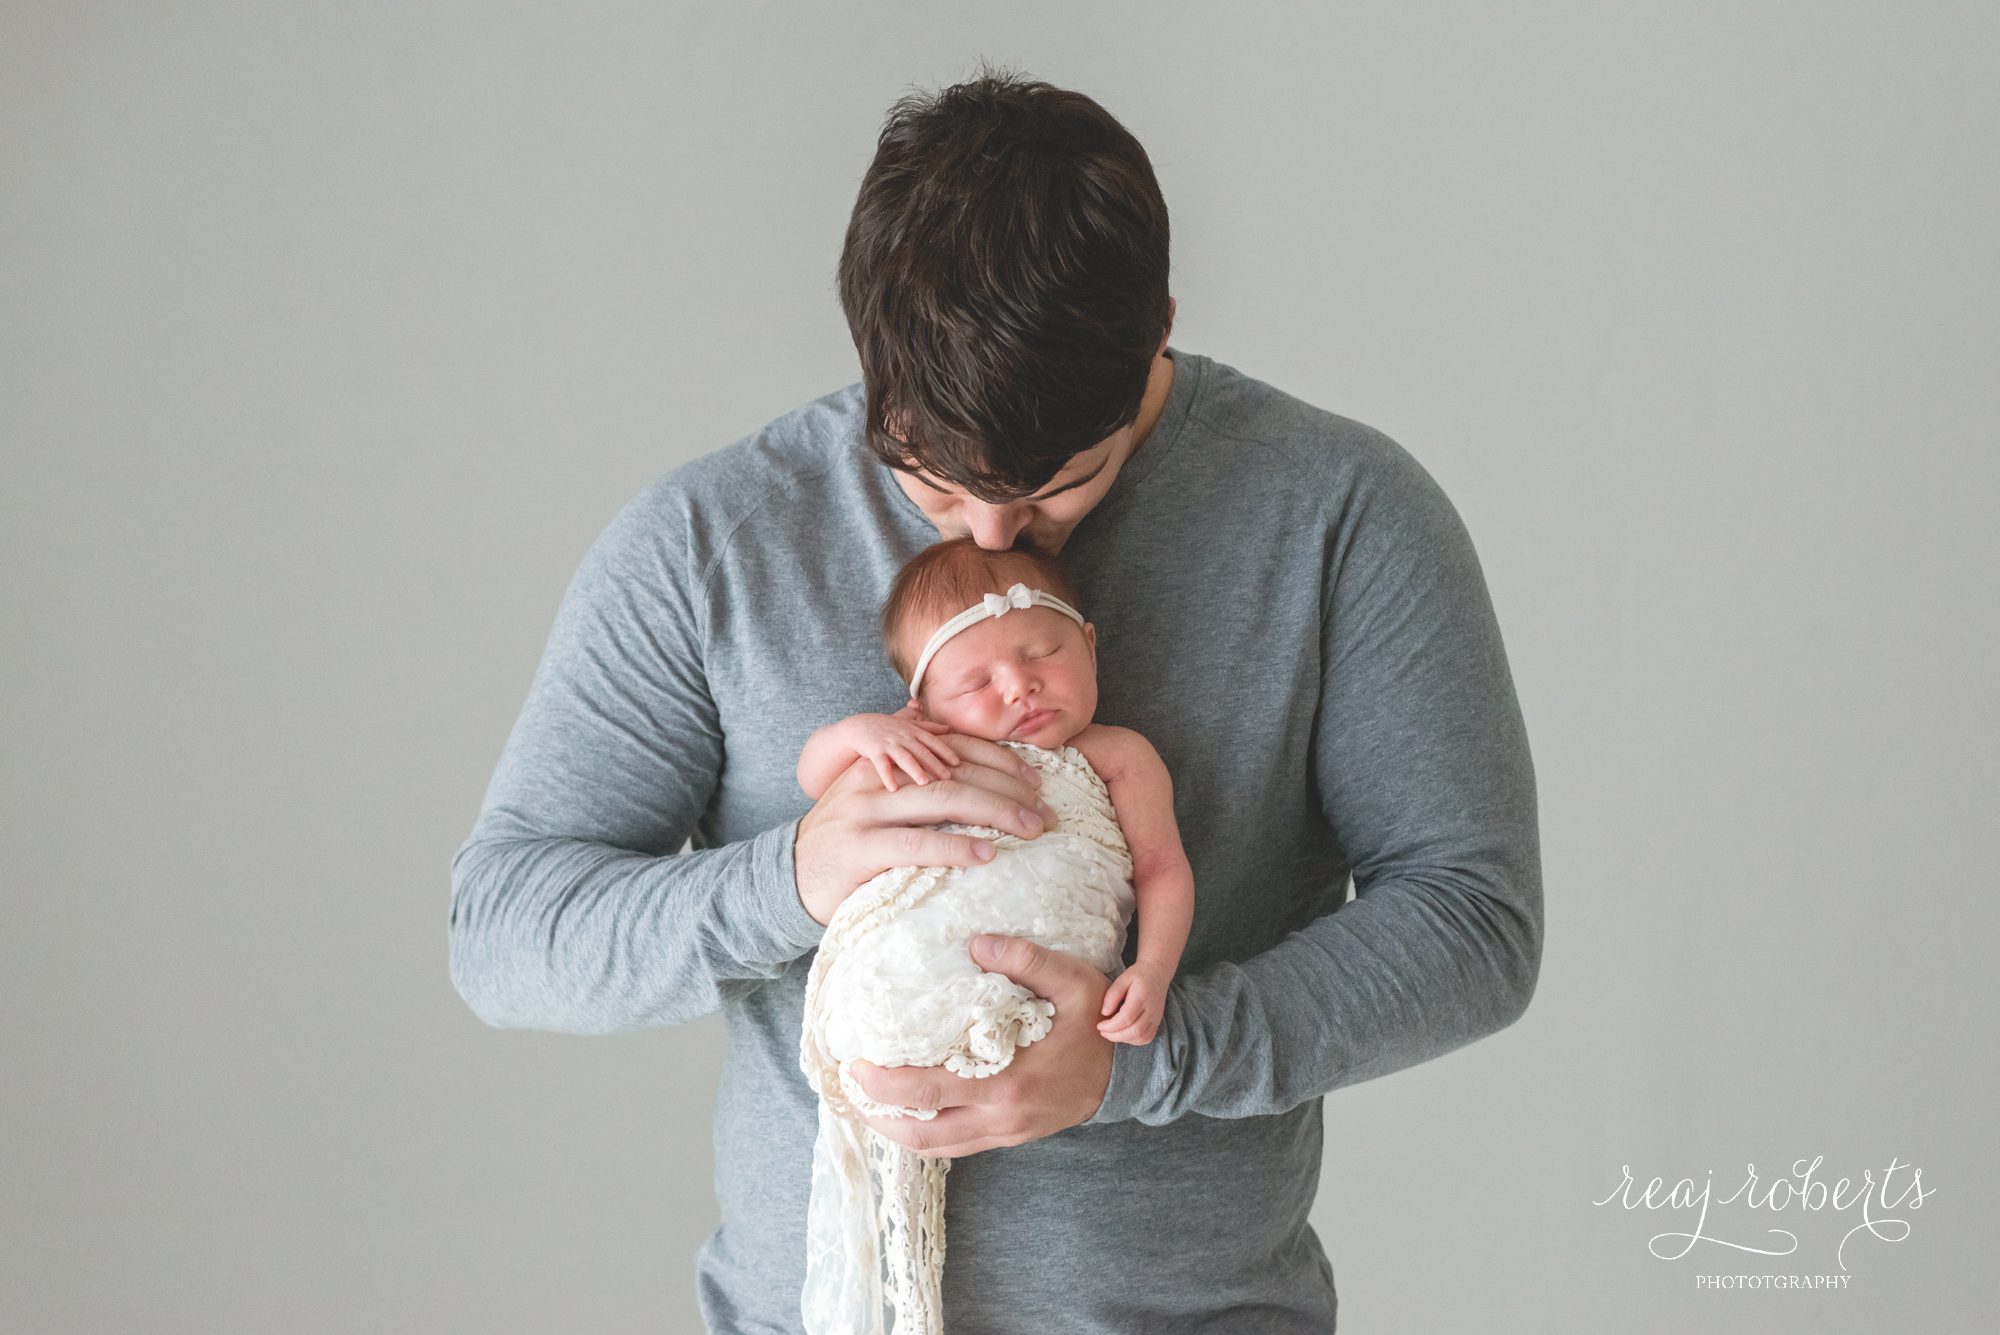 father and newborn girl photos | Reaj Roberts Photography